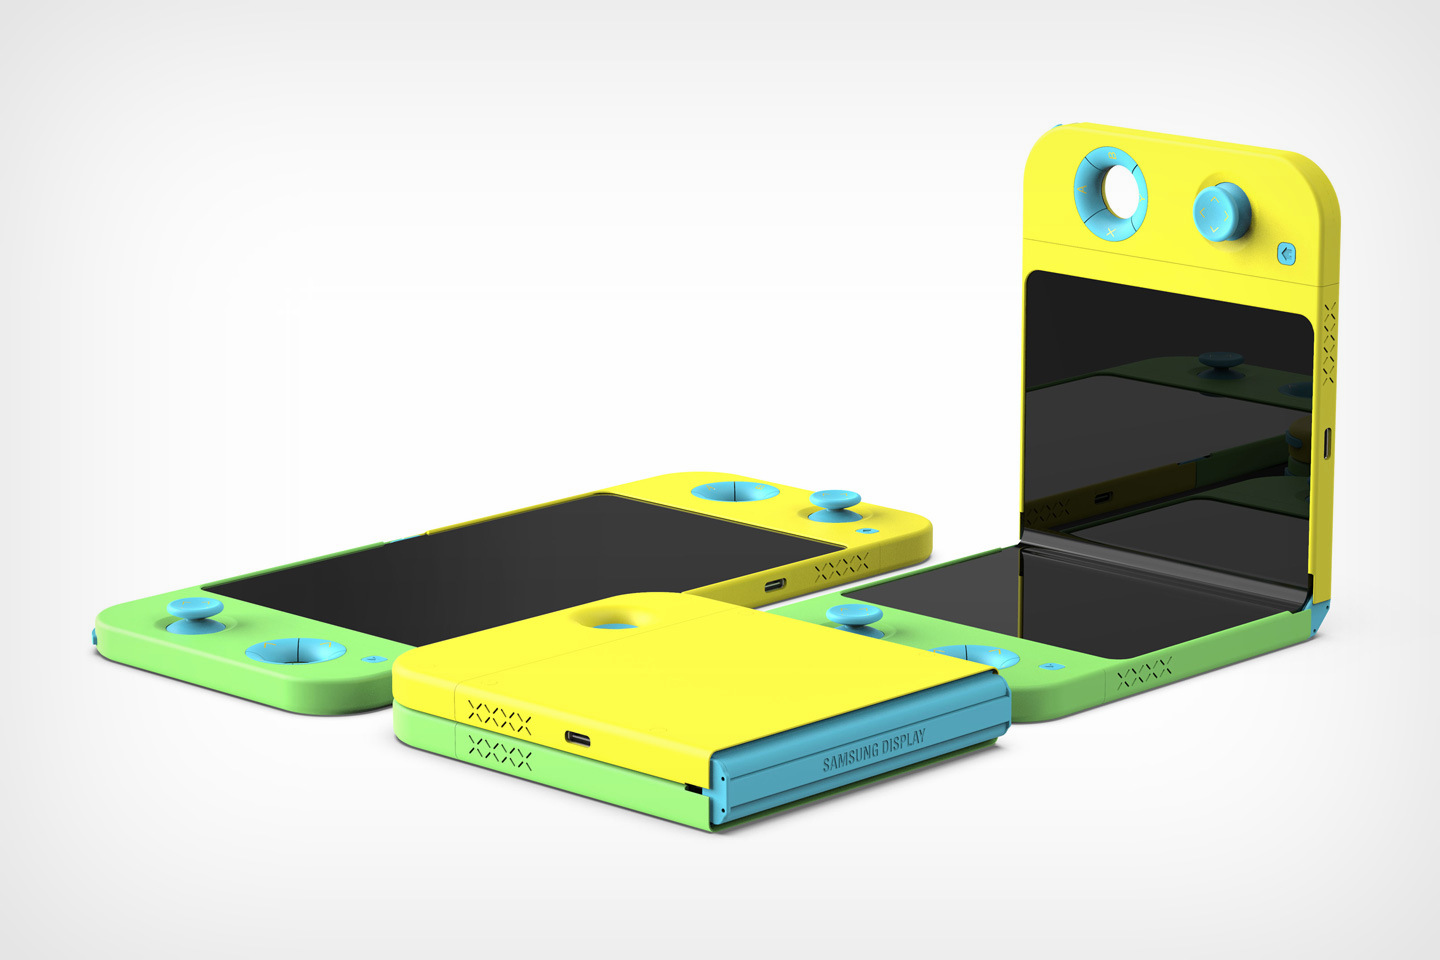 #Analogue joysticks for the Samsung Galaxy Z Flip4 turn the folding smartphone into a Game Boy